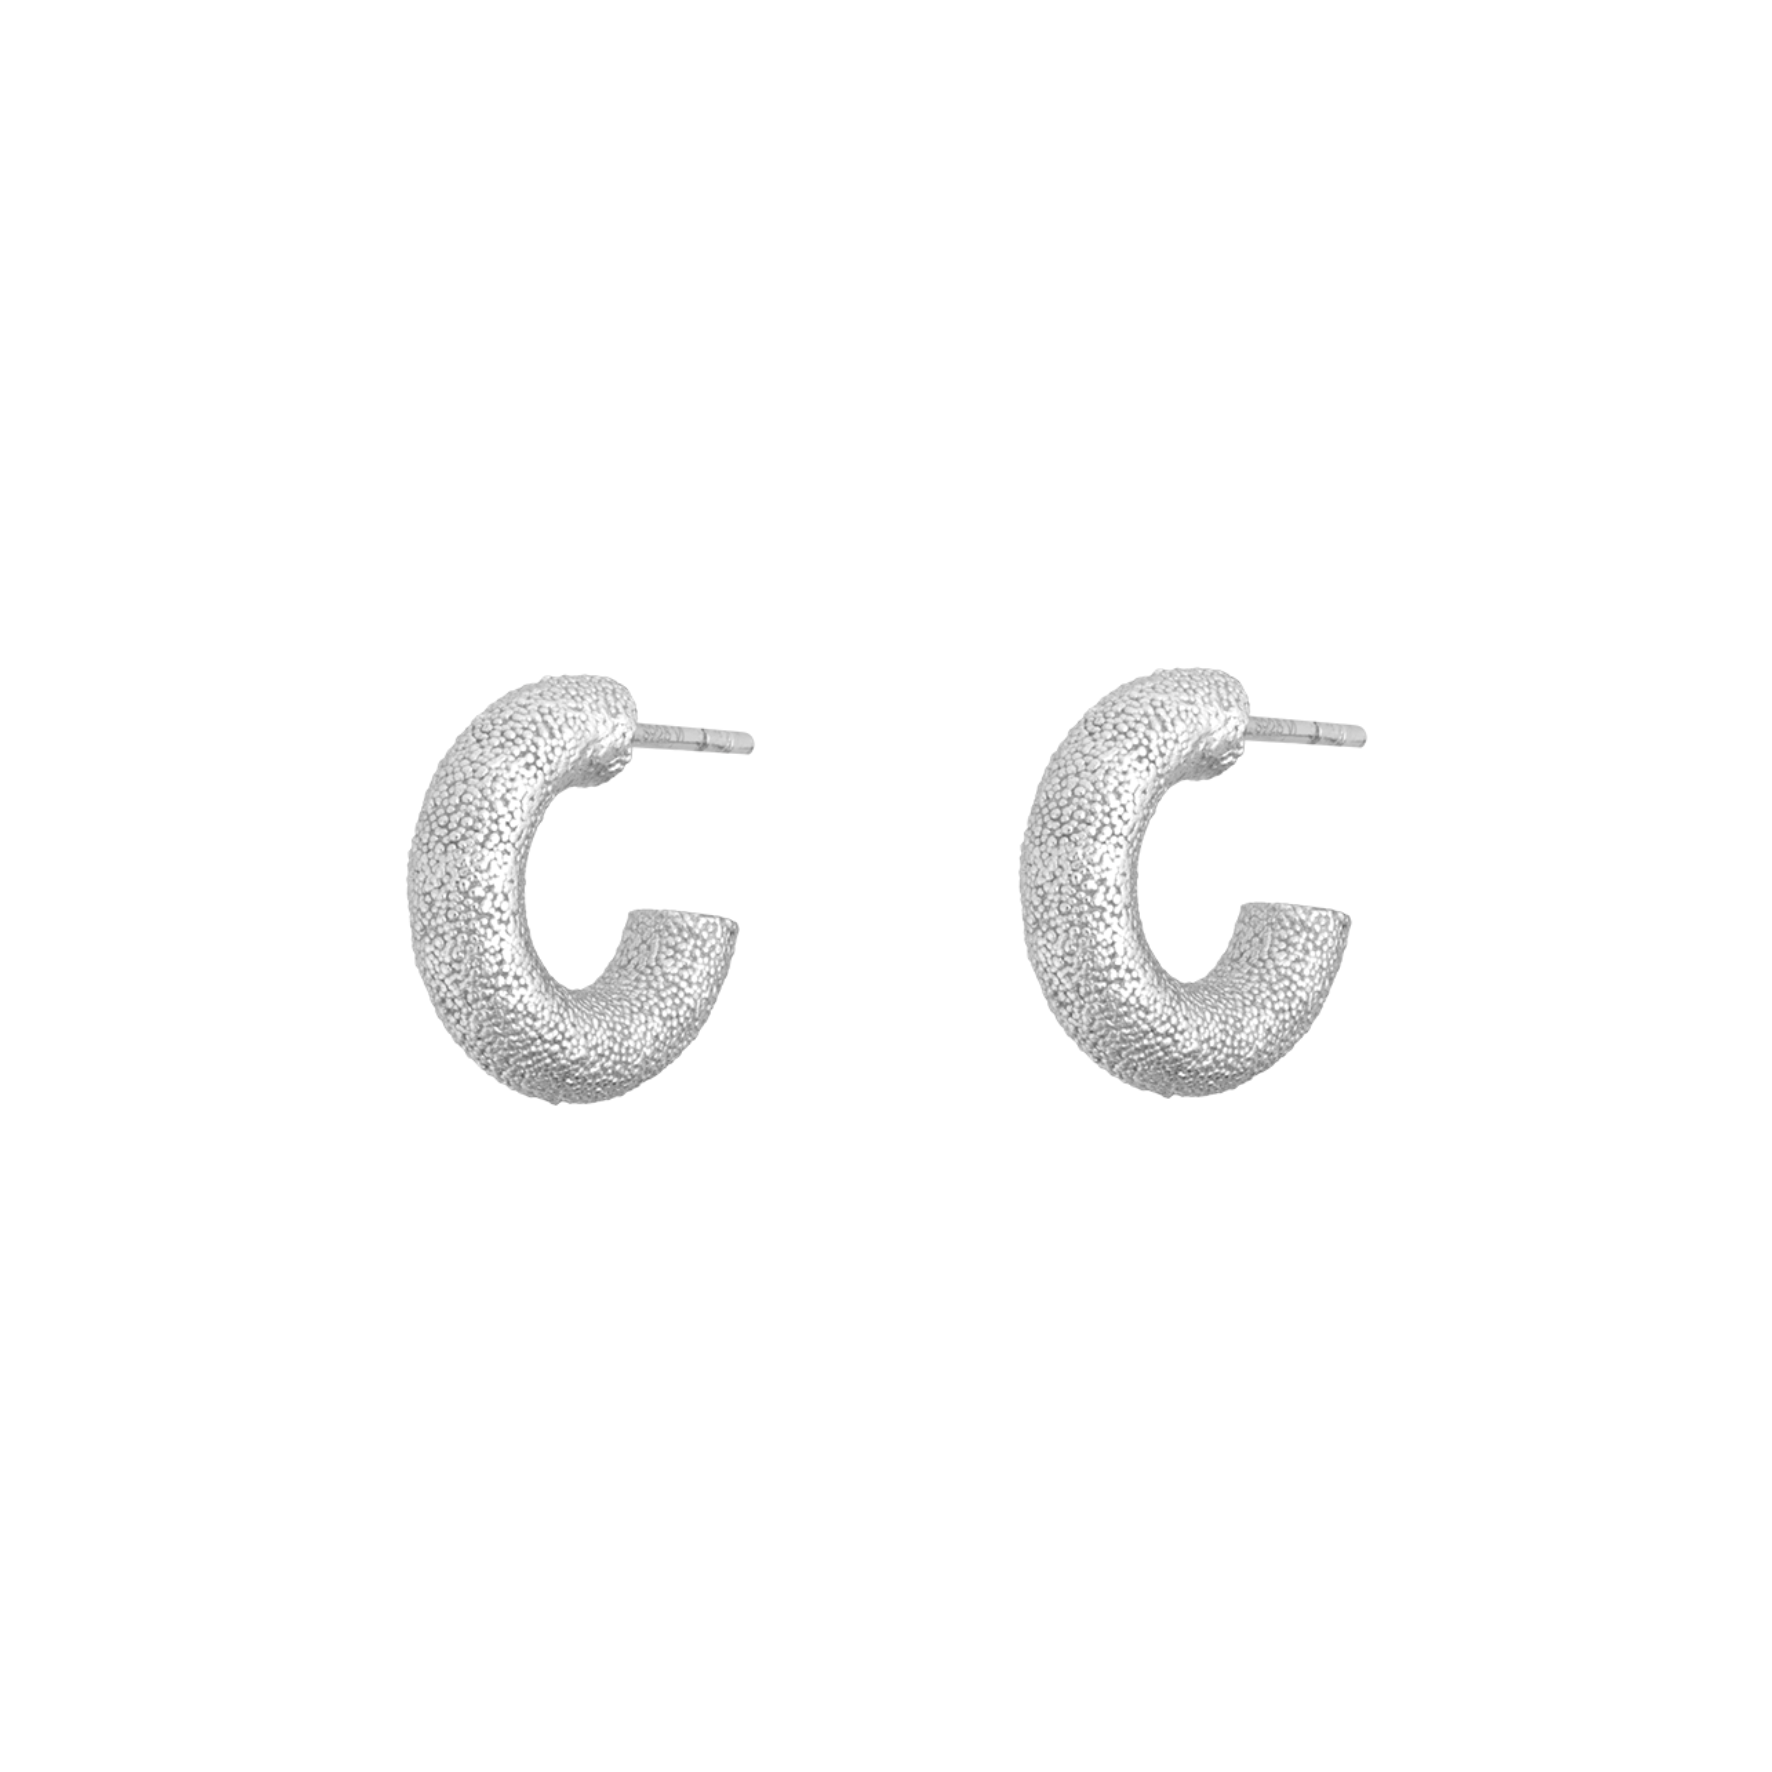 Asphodele Hoop Earrings from House Of Vincent in Silver Sterling 925